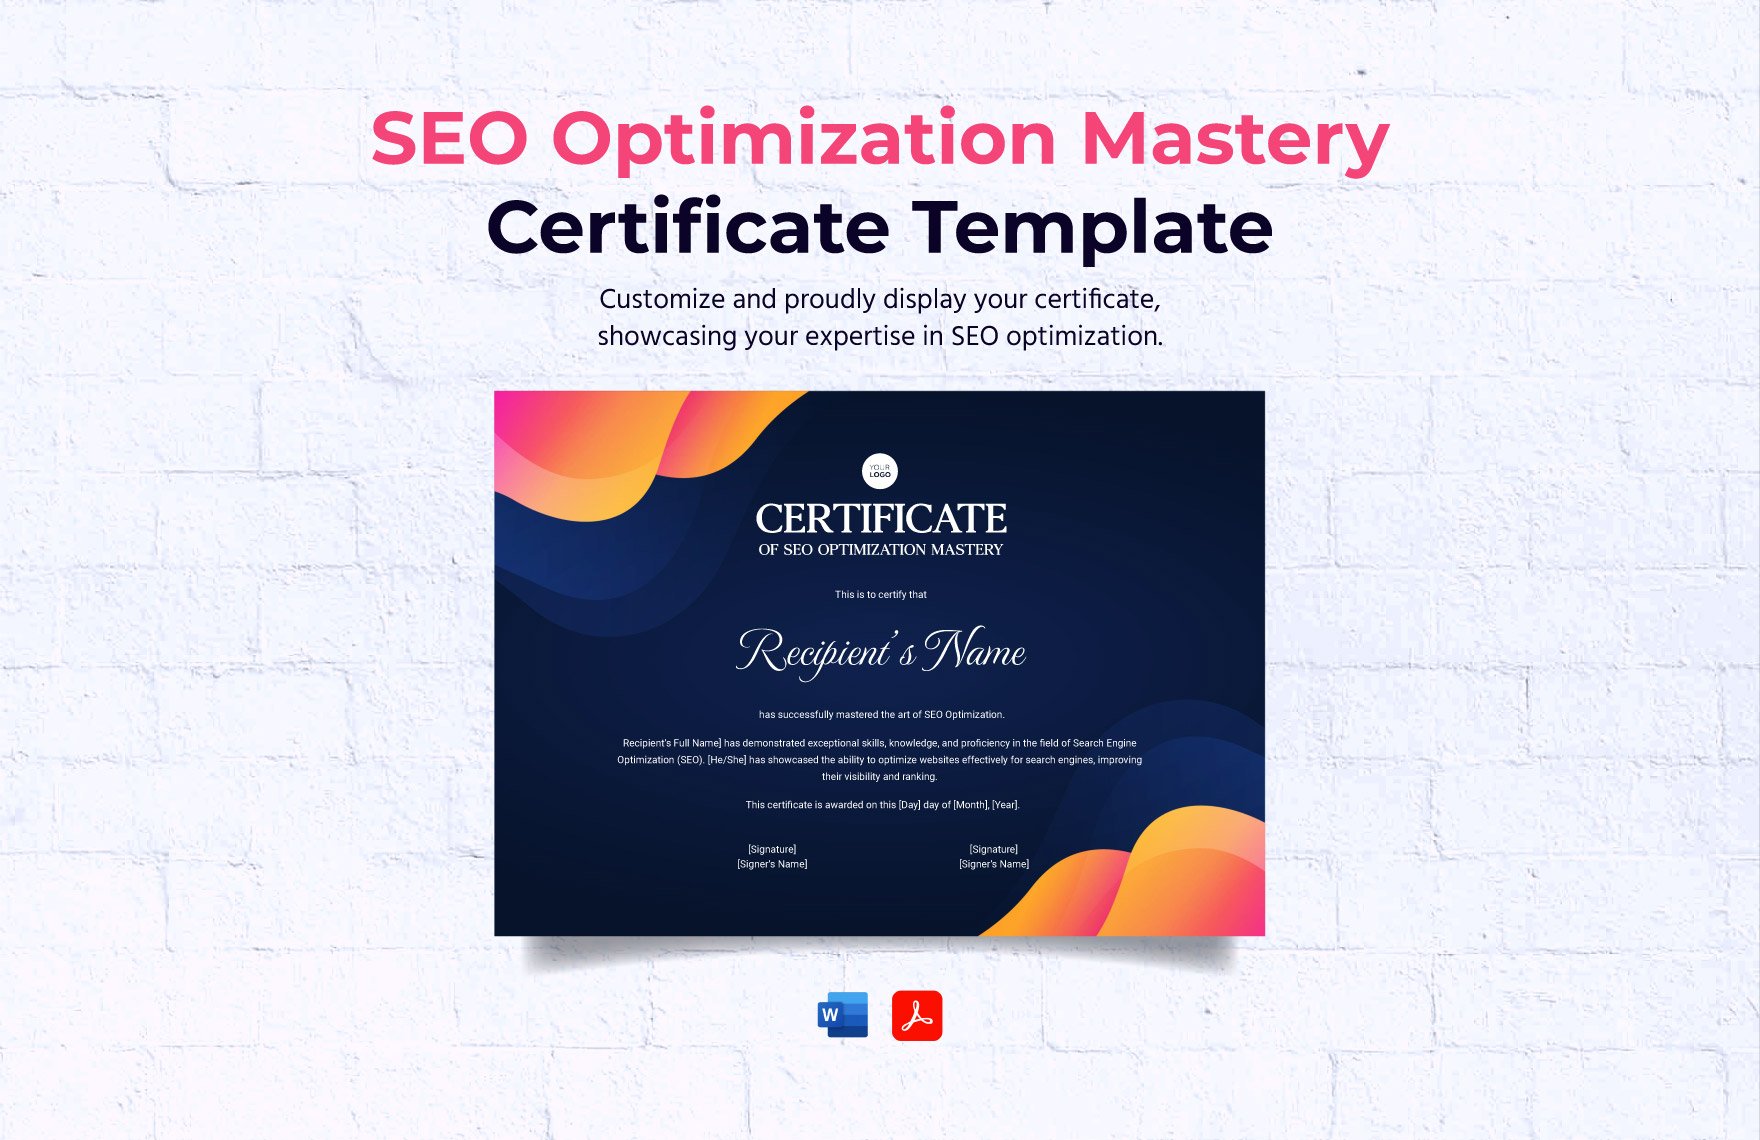 SEO Optimization Mastery Certificate Template